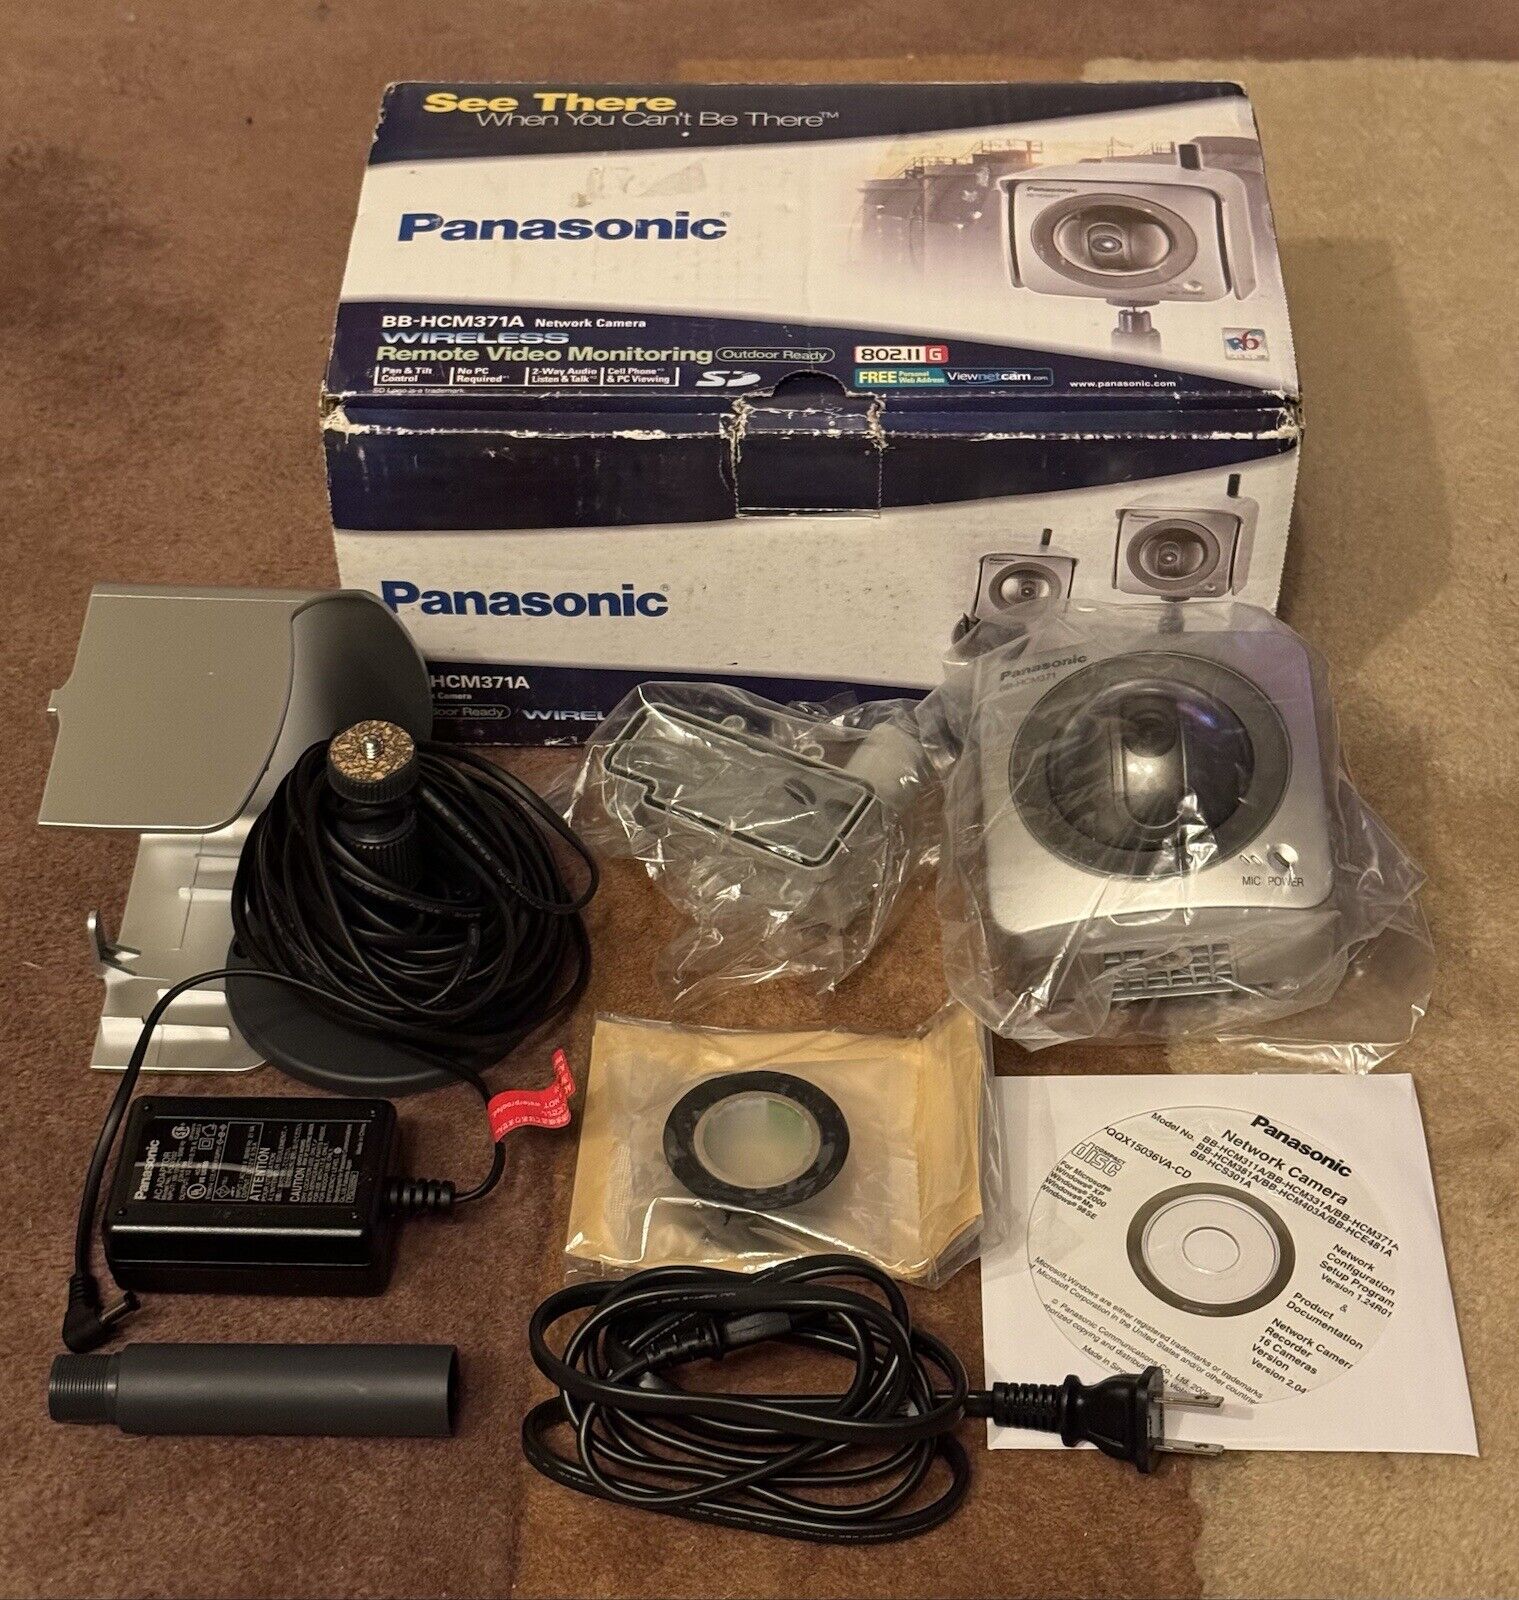 Panasonic BB-HCM371A Outdoor Ready Wireless Network Camera NEW Open Box